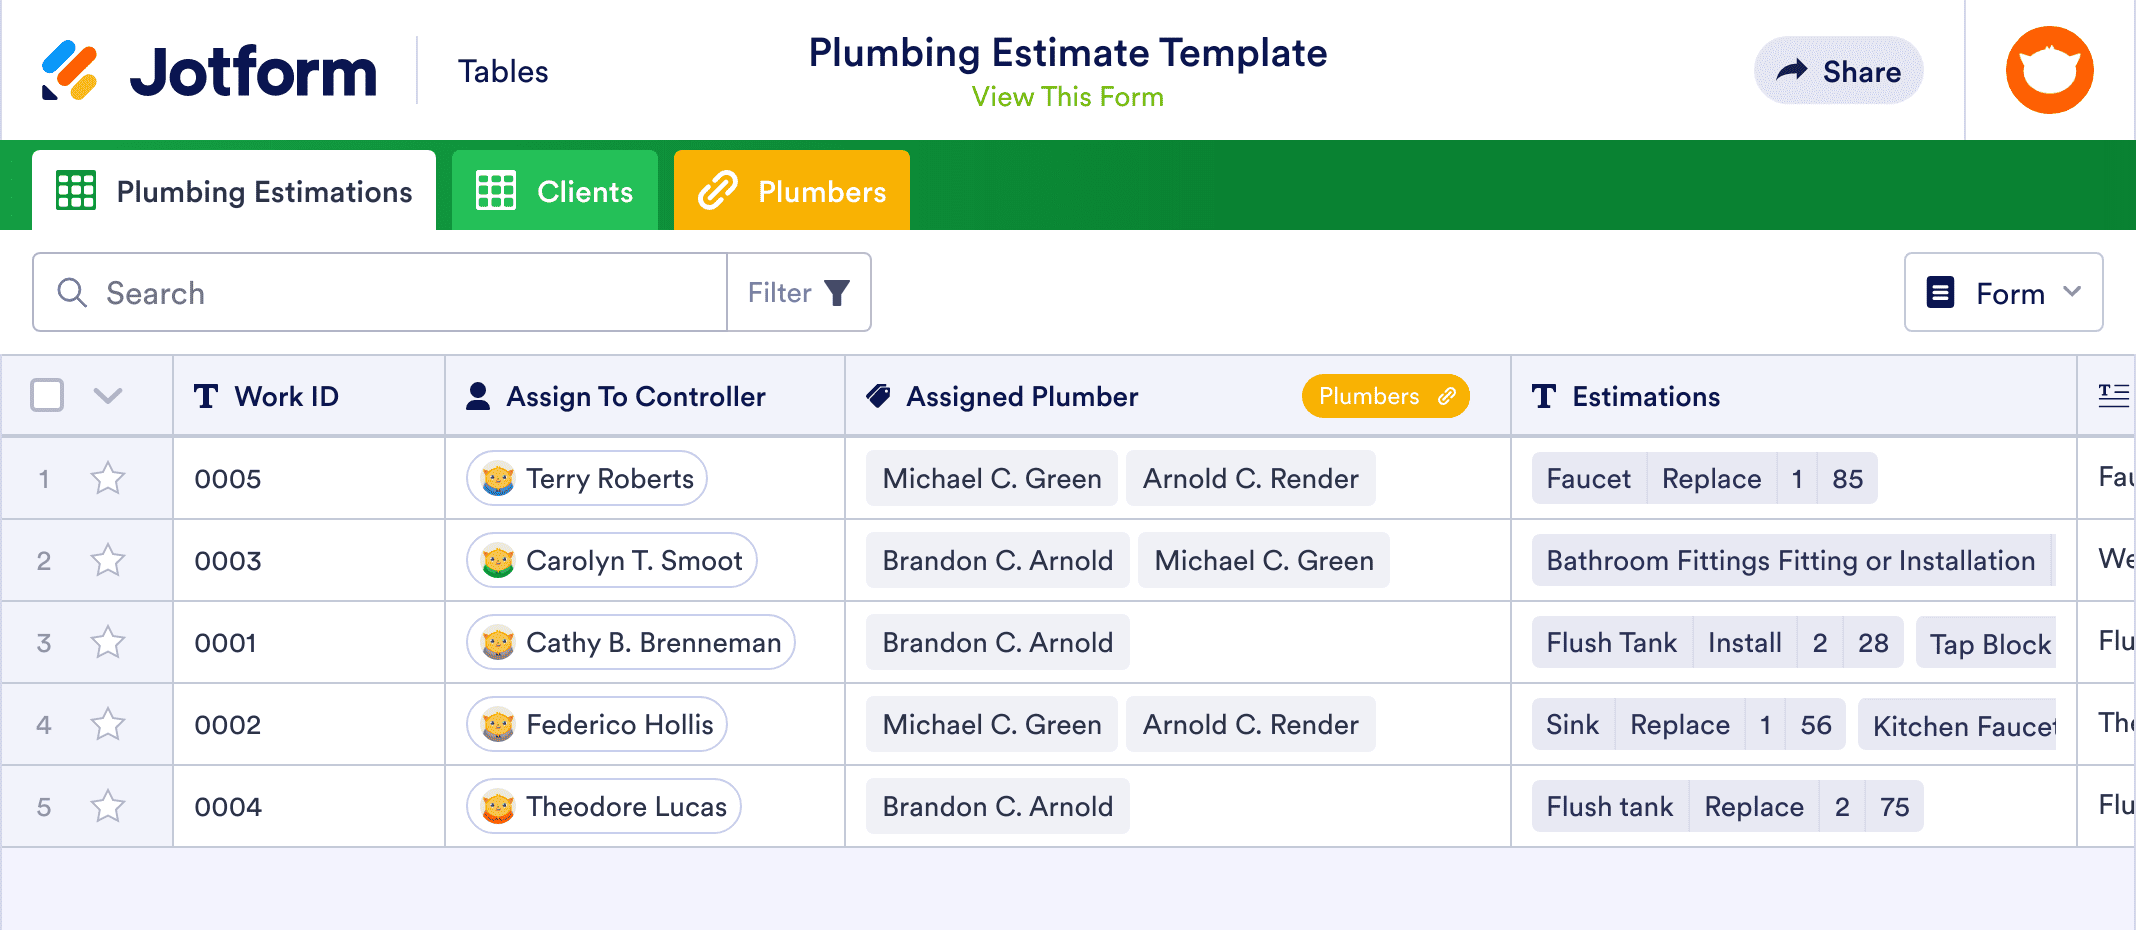 Plumbing Estimate Template